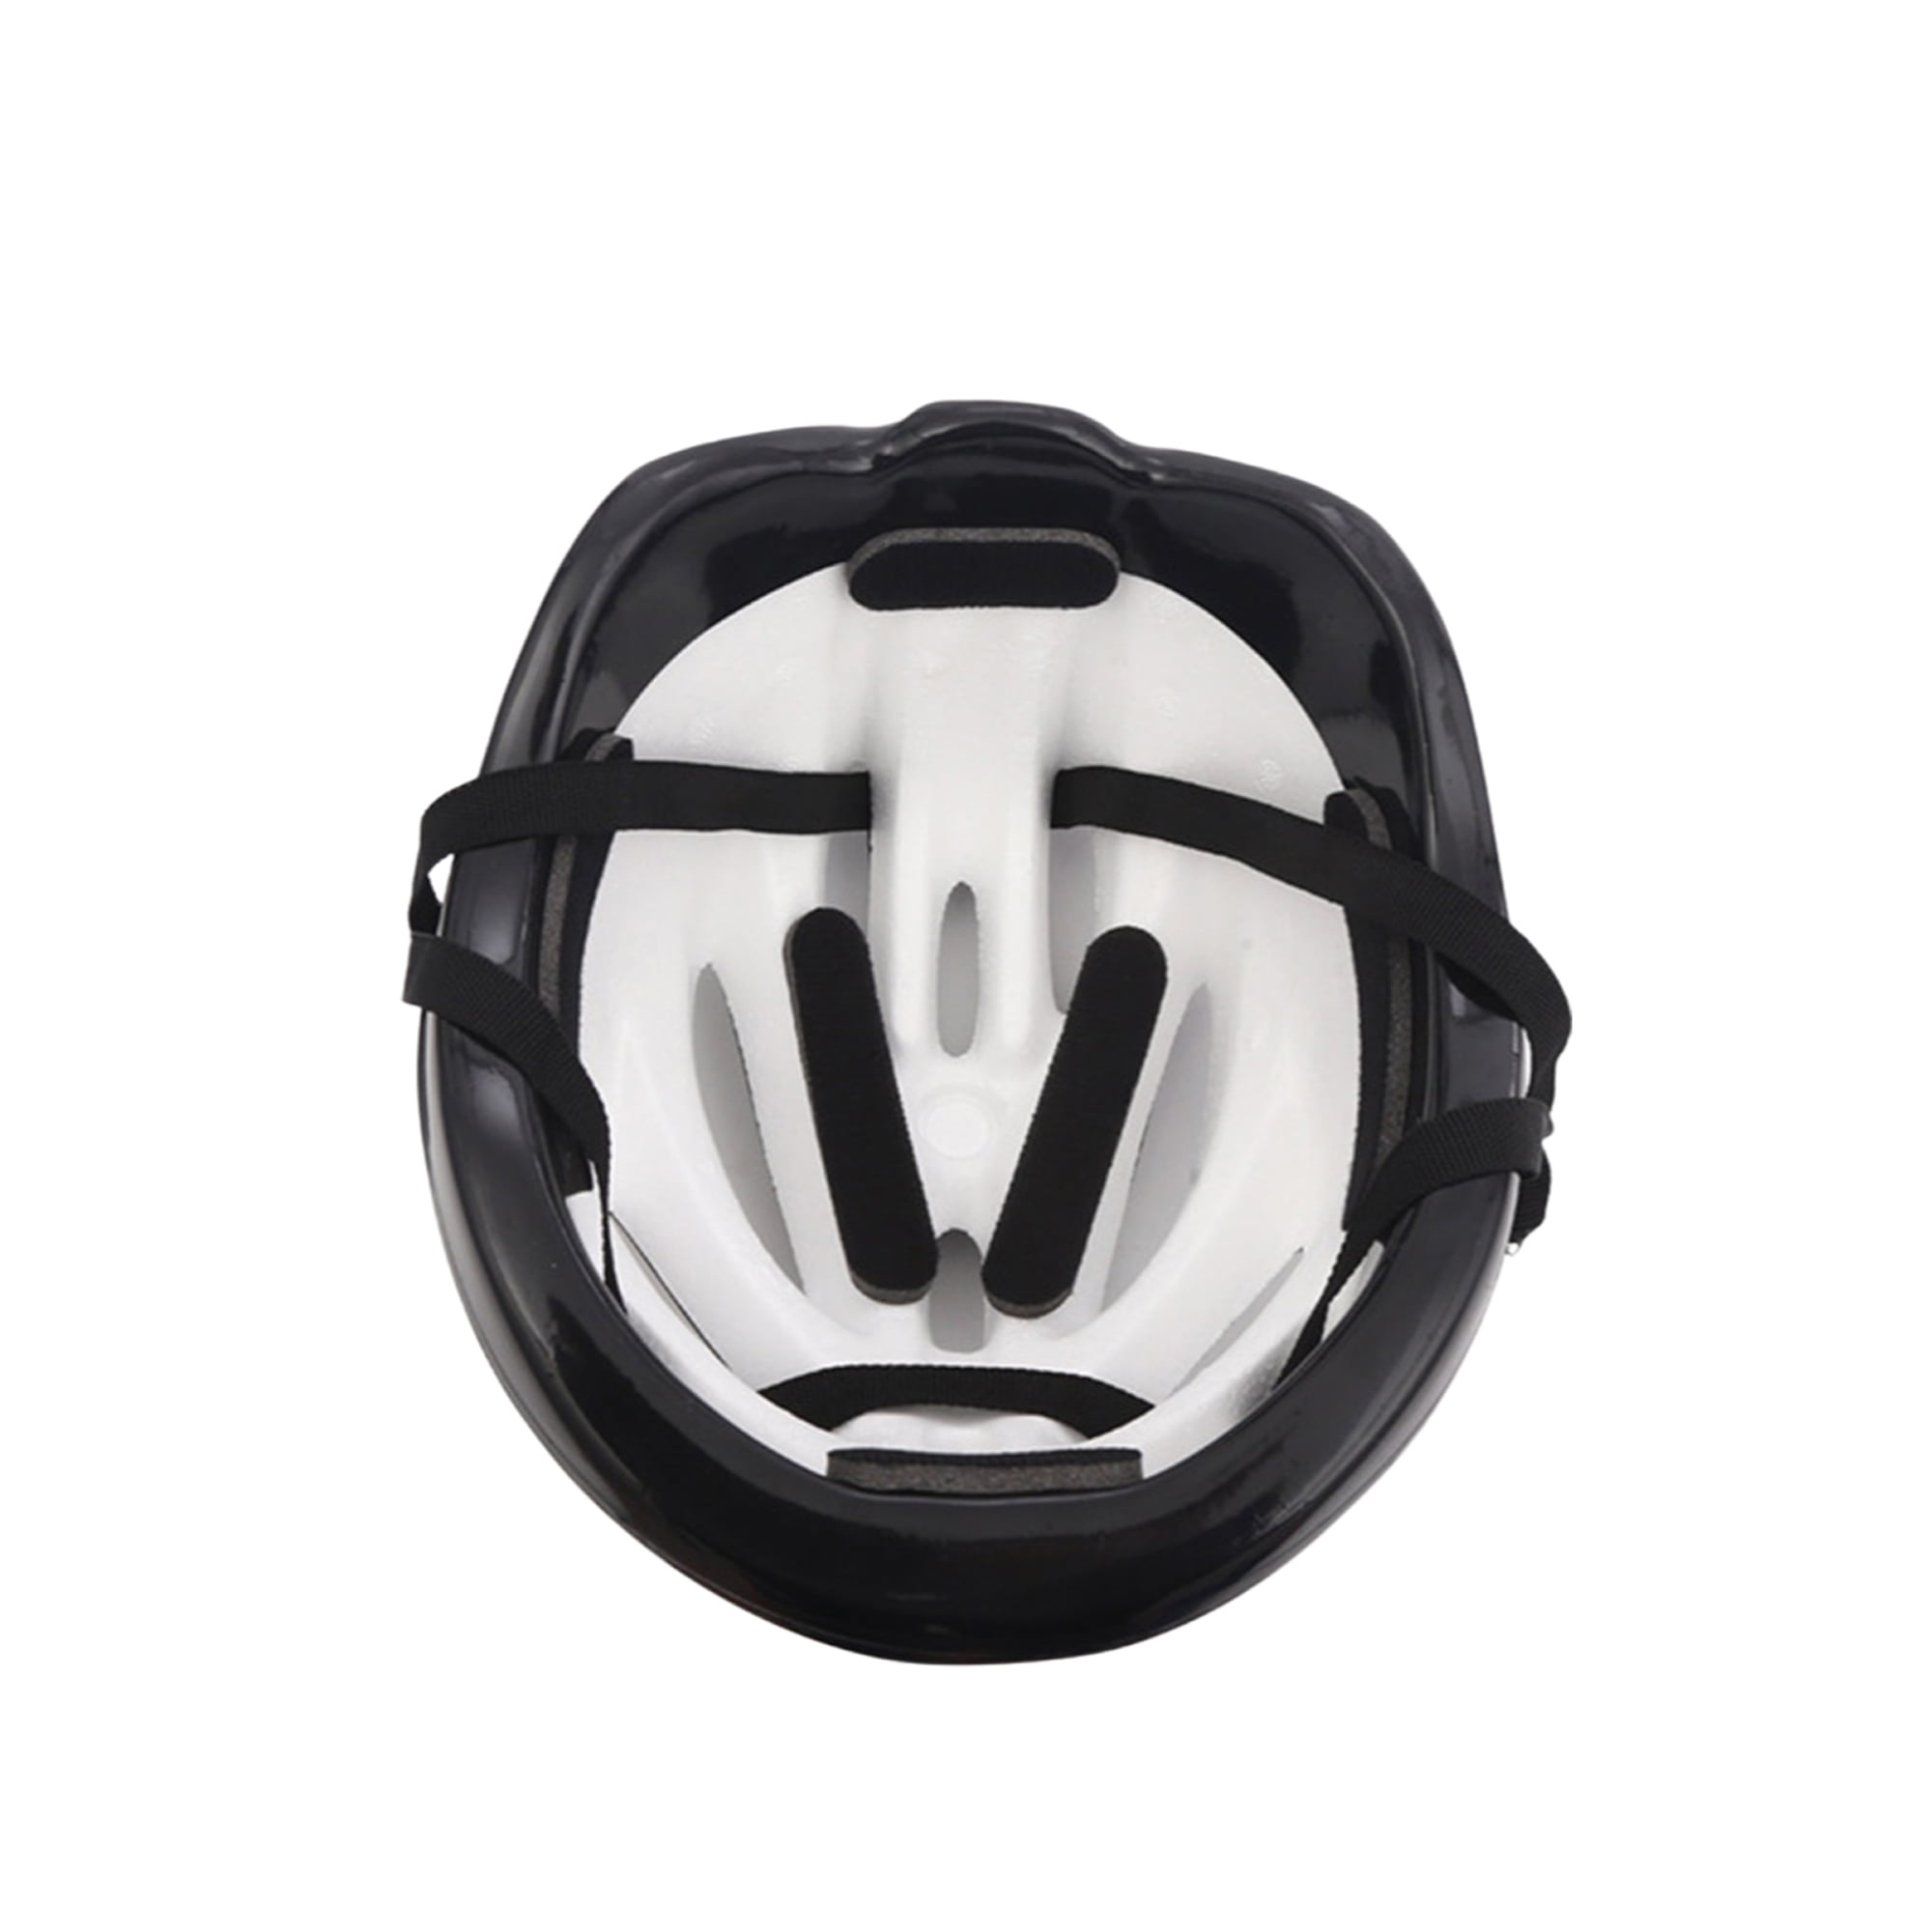 TFFR Adult Bike Helmet, Adjustable Multi-Sport Protective Mountain Road Cycling Helmet for Men Women